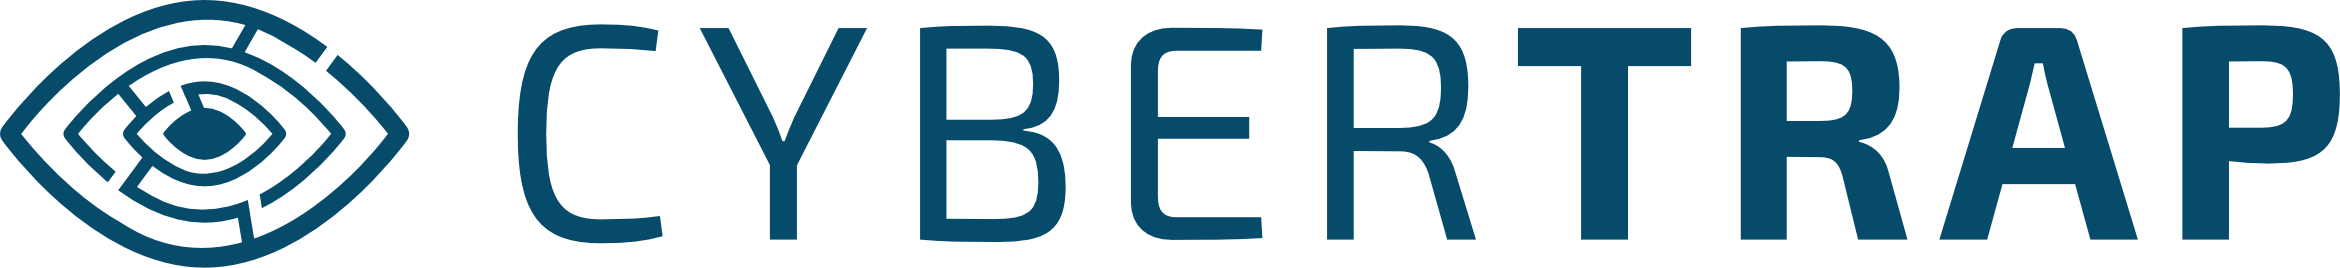 CYBERTRAP logo